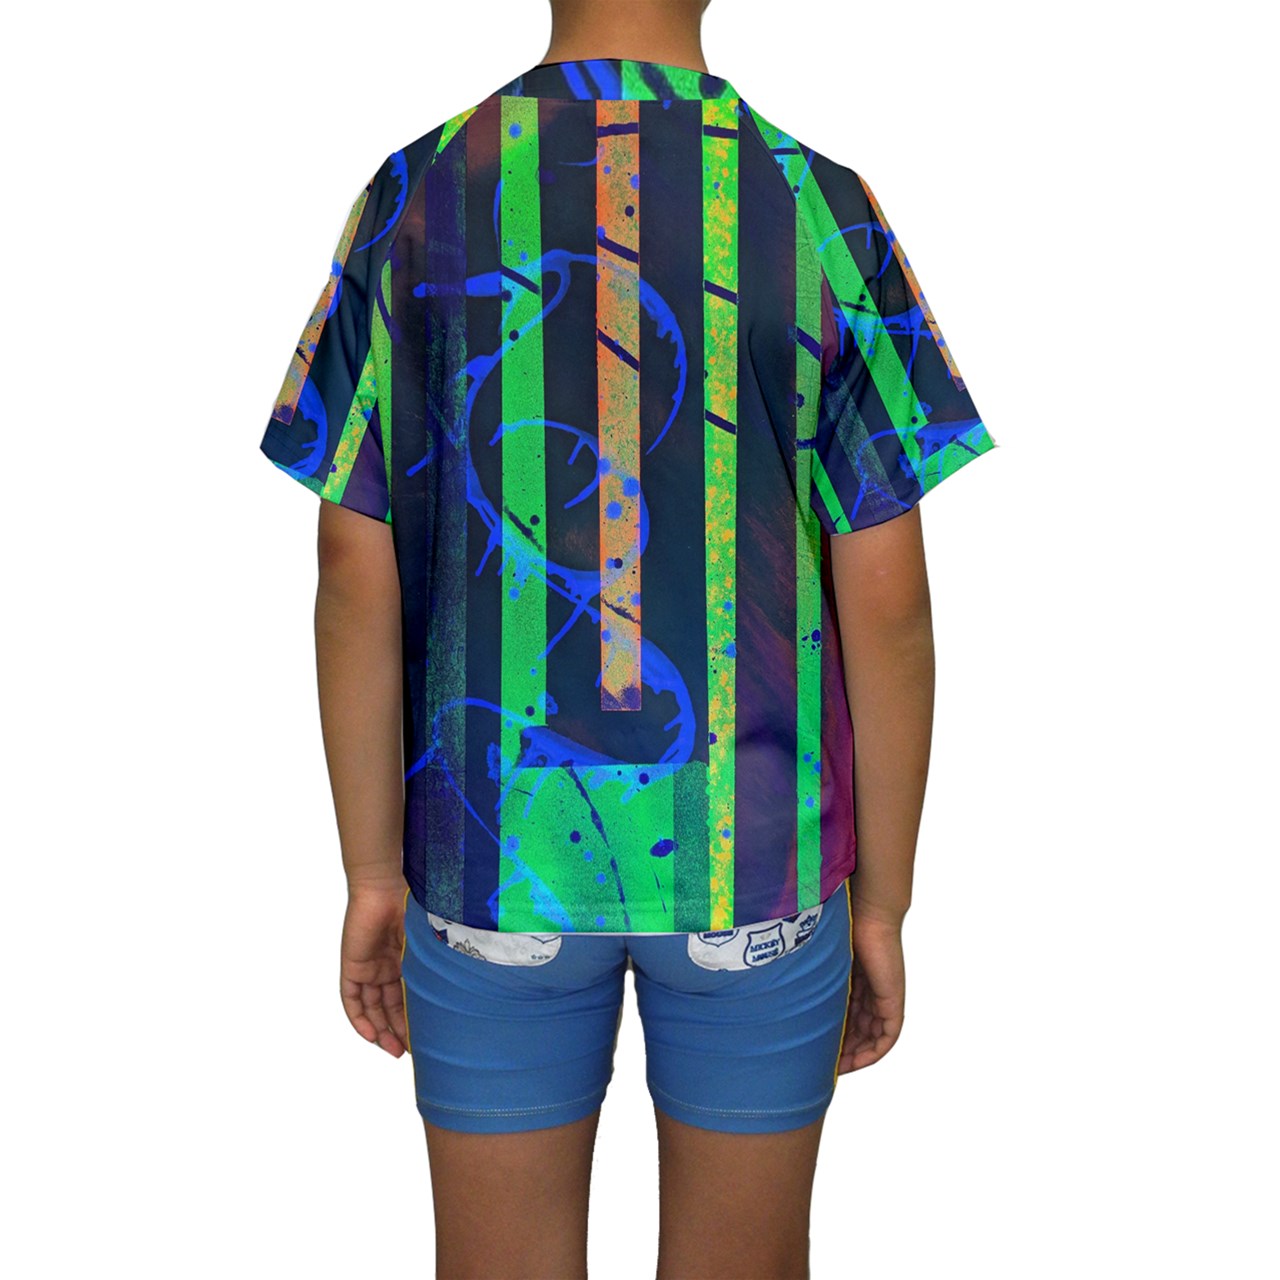 Gavin Scott Short Sleeve Swim Shirt (Youth/Petite Genderless 2'8"-5'3")